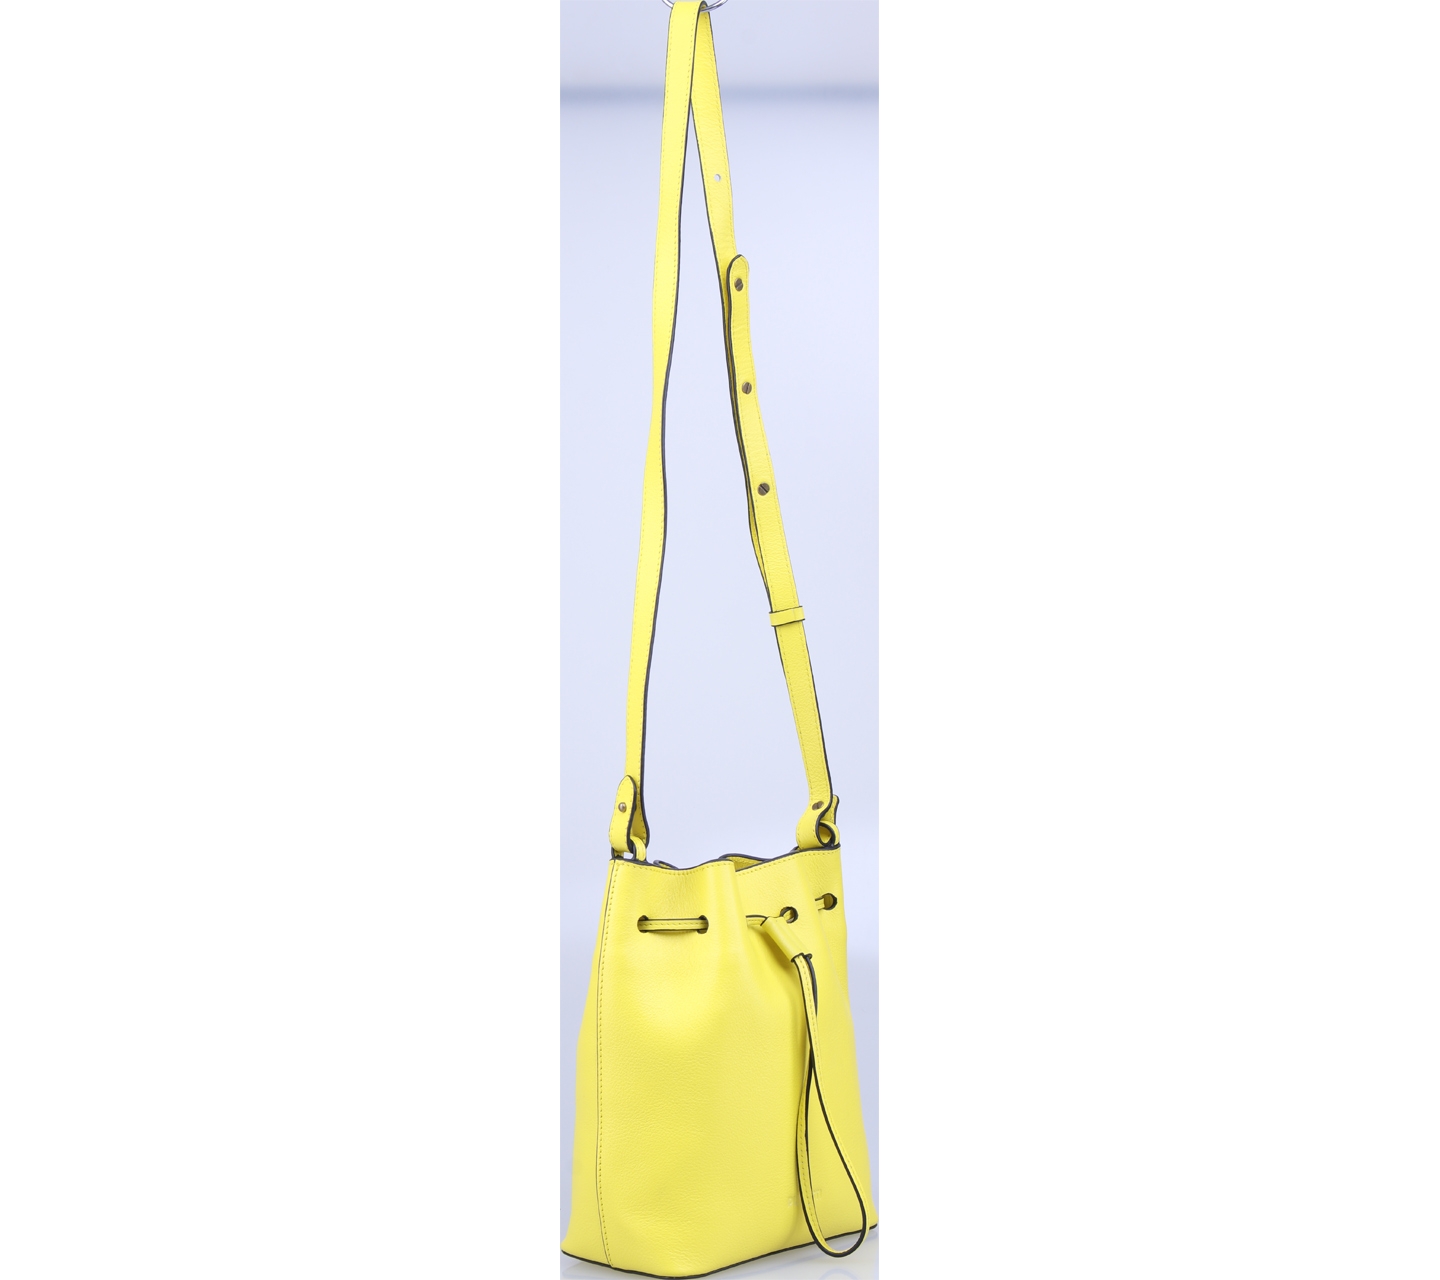 Purotti Yellow Sling Bag